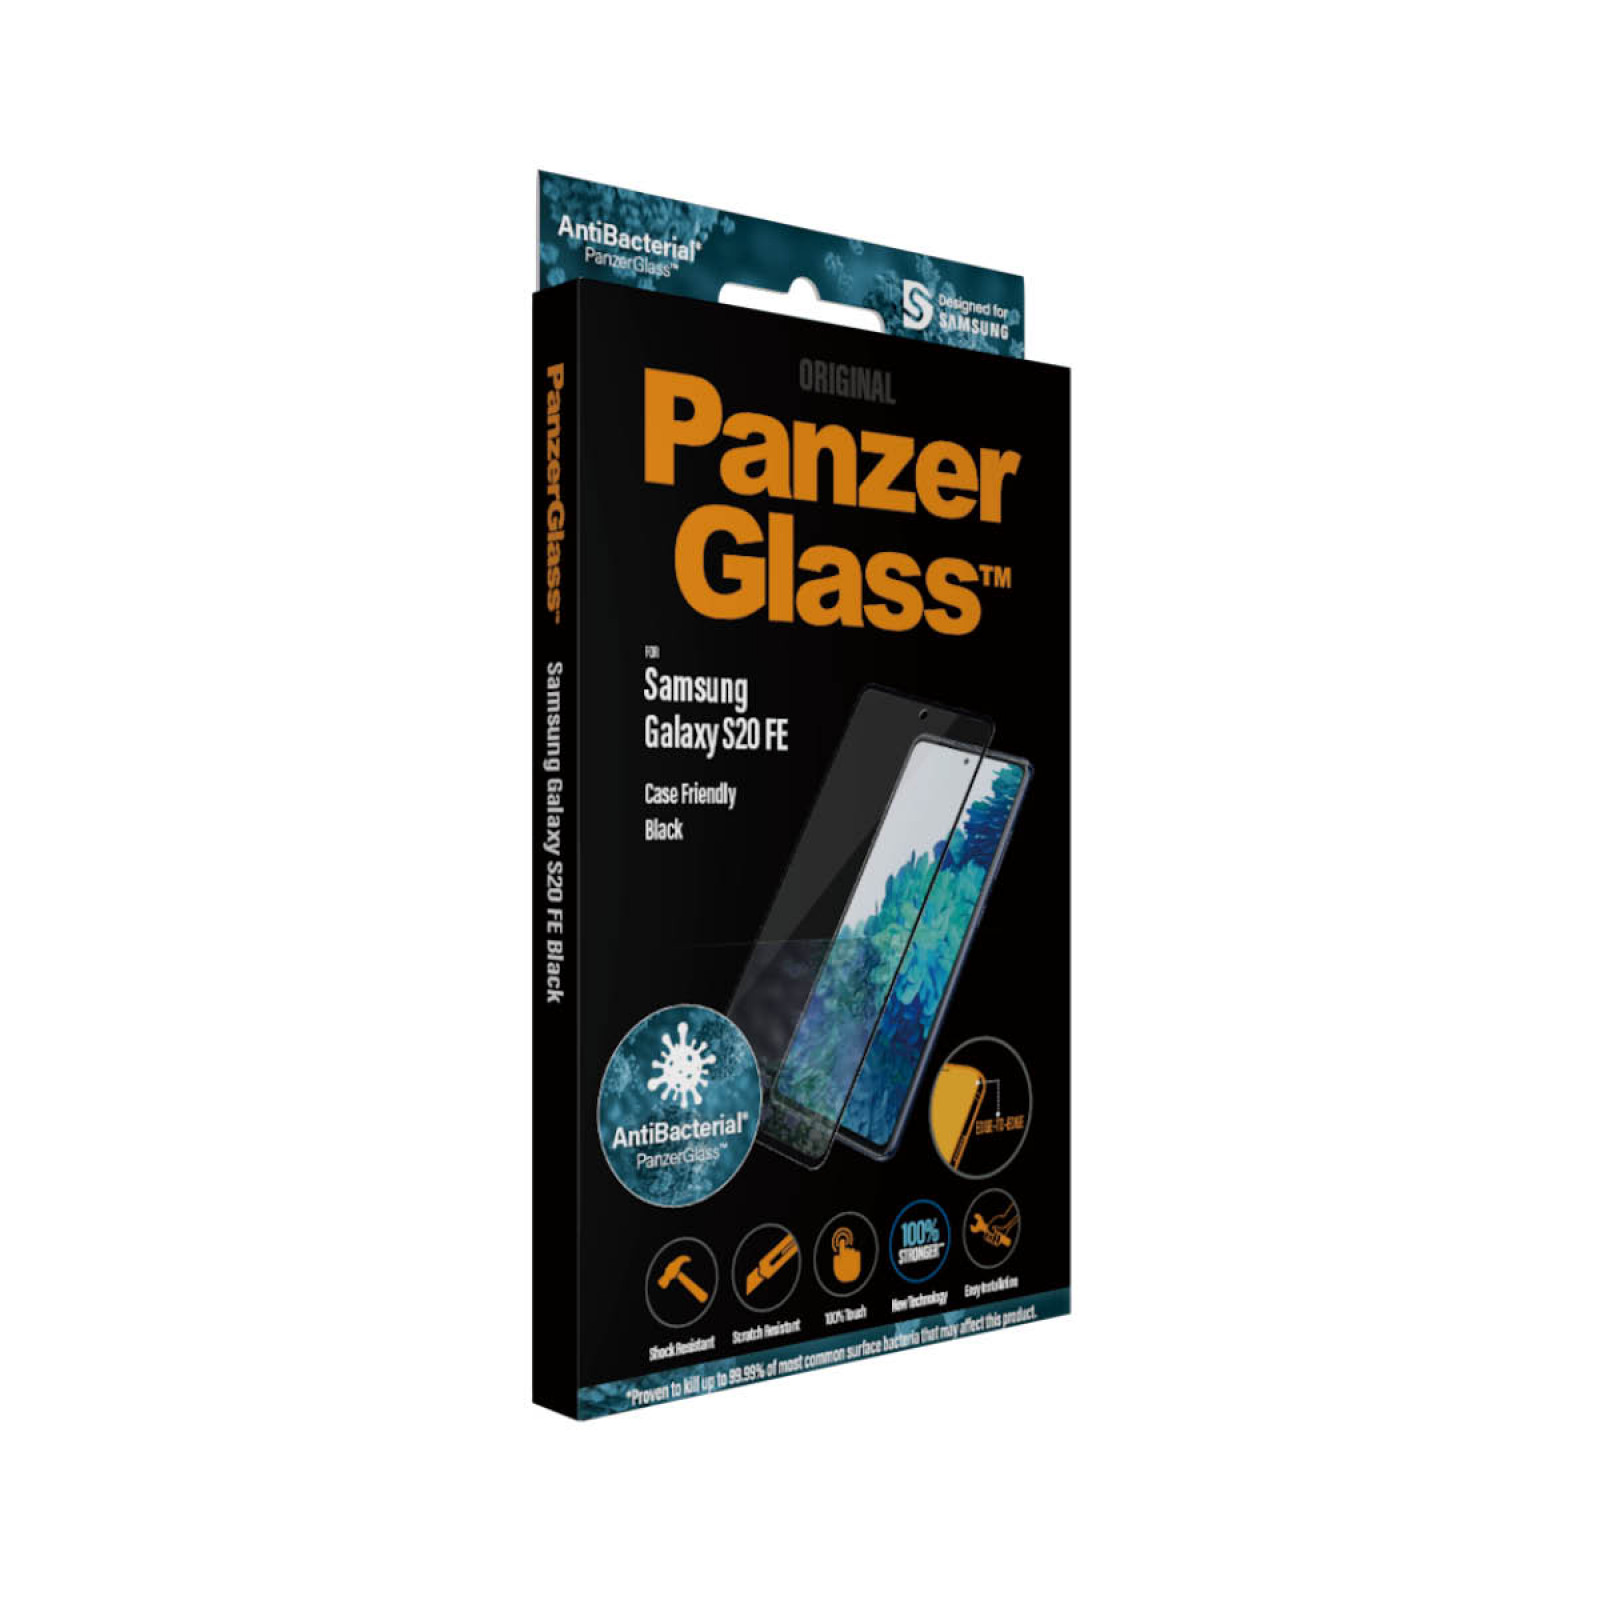 Стъклен протектор PanzerGlass за Samsung Galaxy S20 FE Case Friendly AntiBacterial Черен